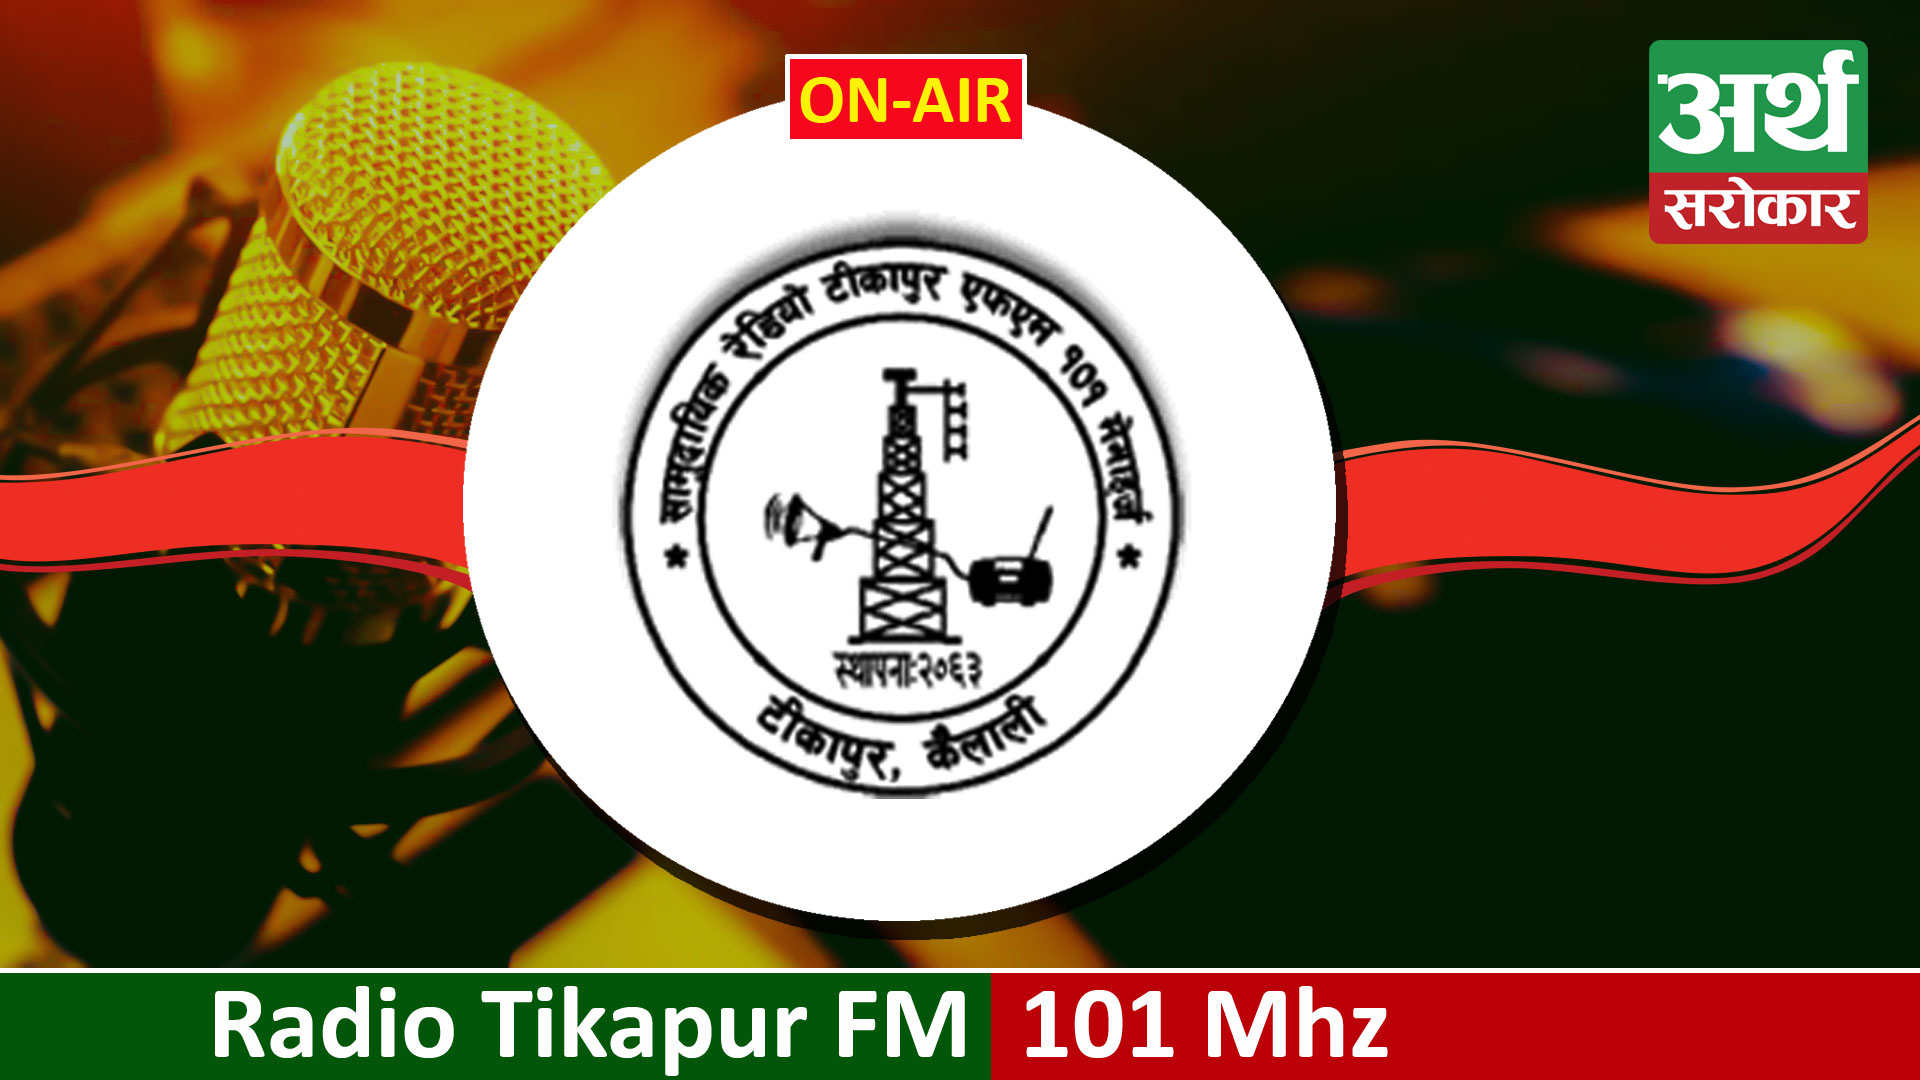 Tikapur FM 101 Mhz